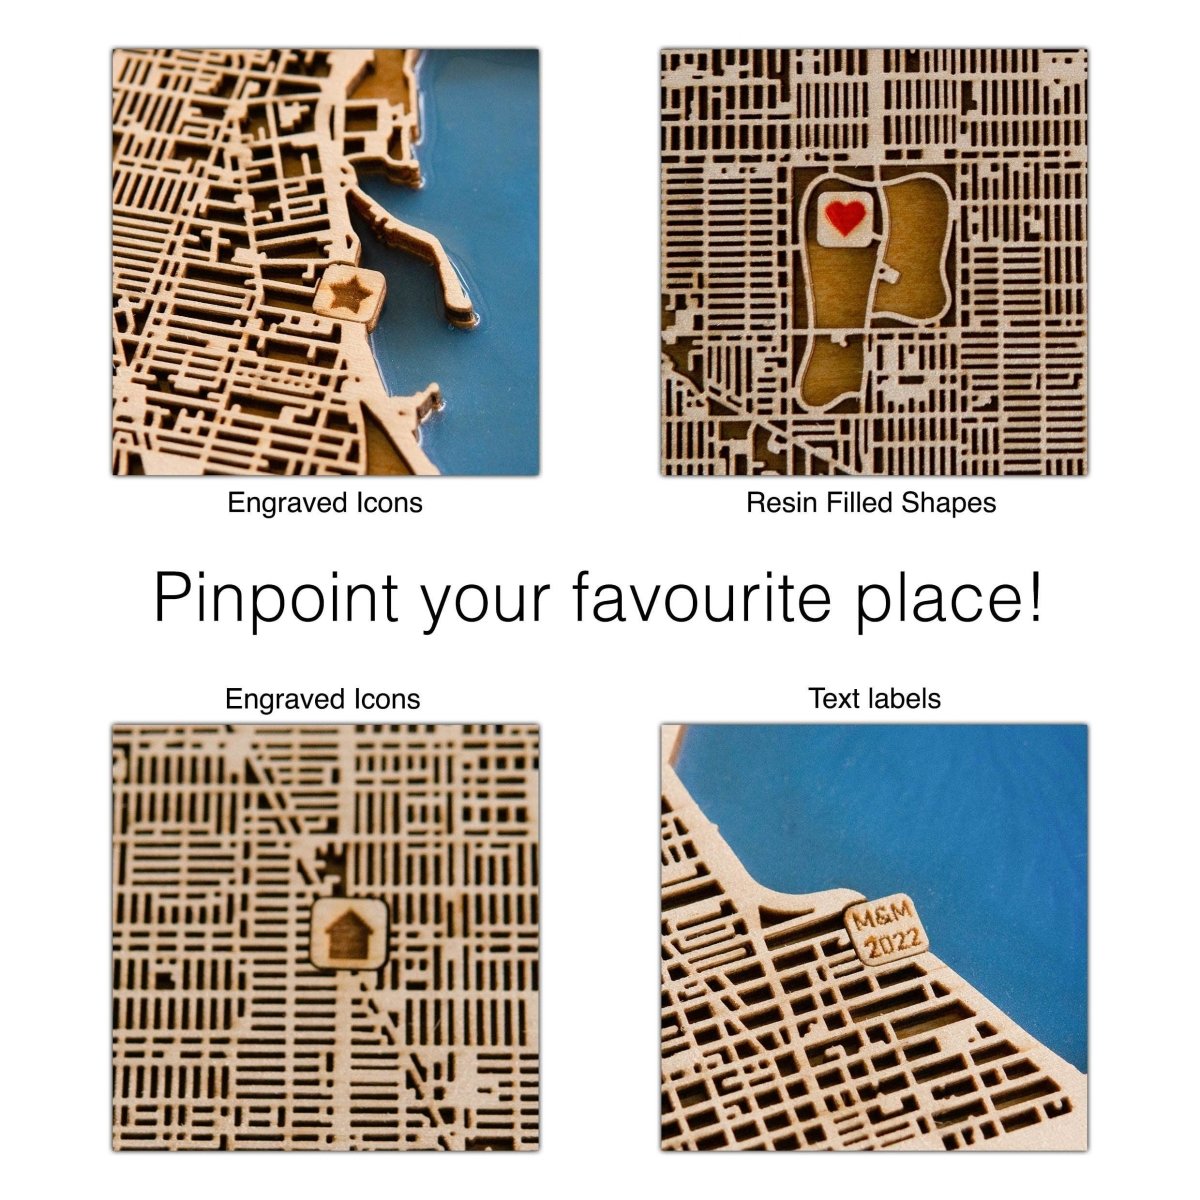 Paris Wooden City Map | Wood & Epoxy - Kutalp